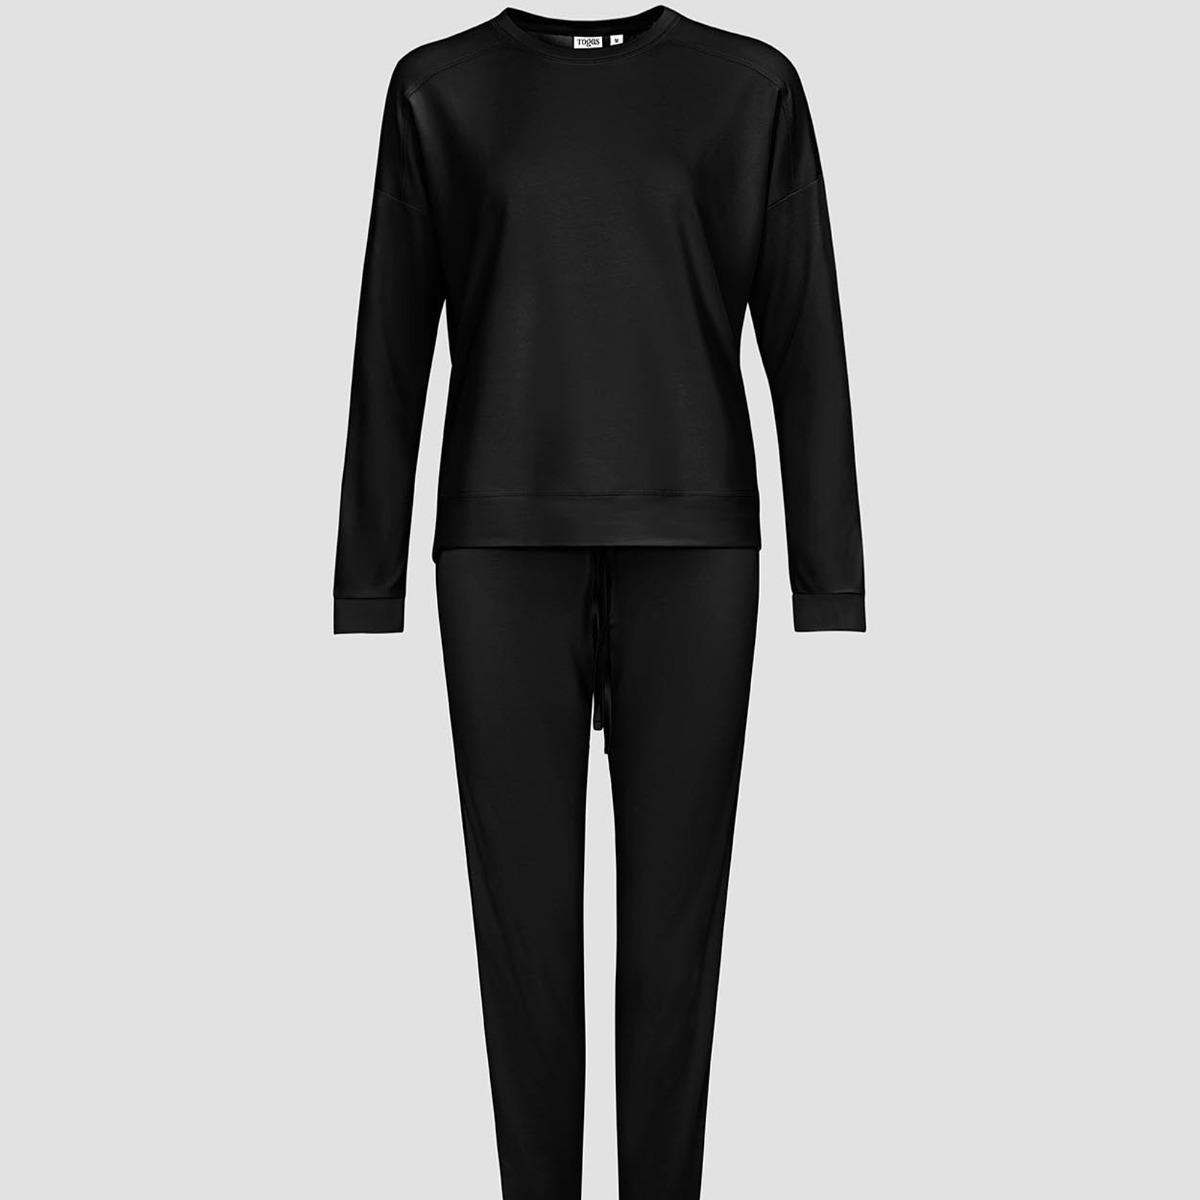 Женская пижама Togas Рене чёрная M (46), цвет чёрный, размер 46